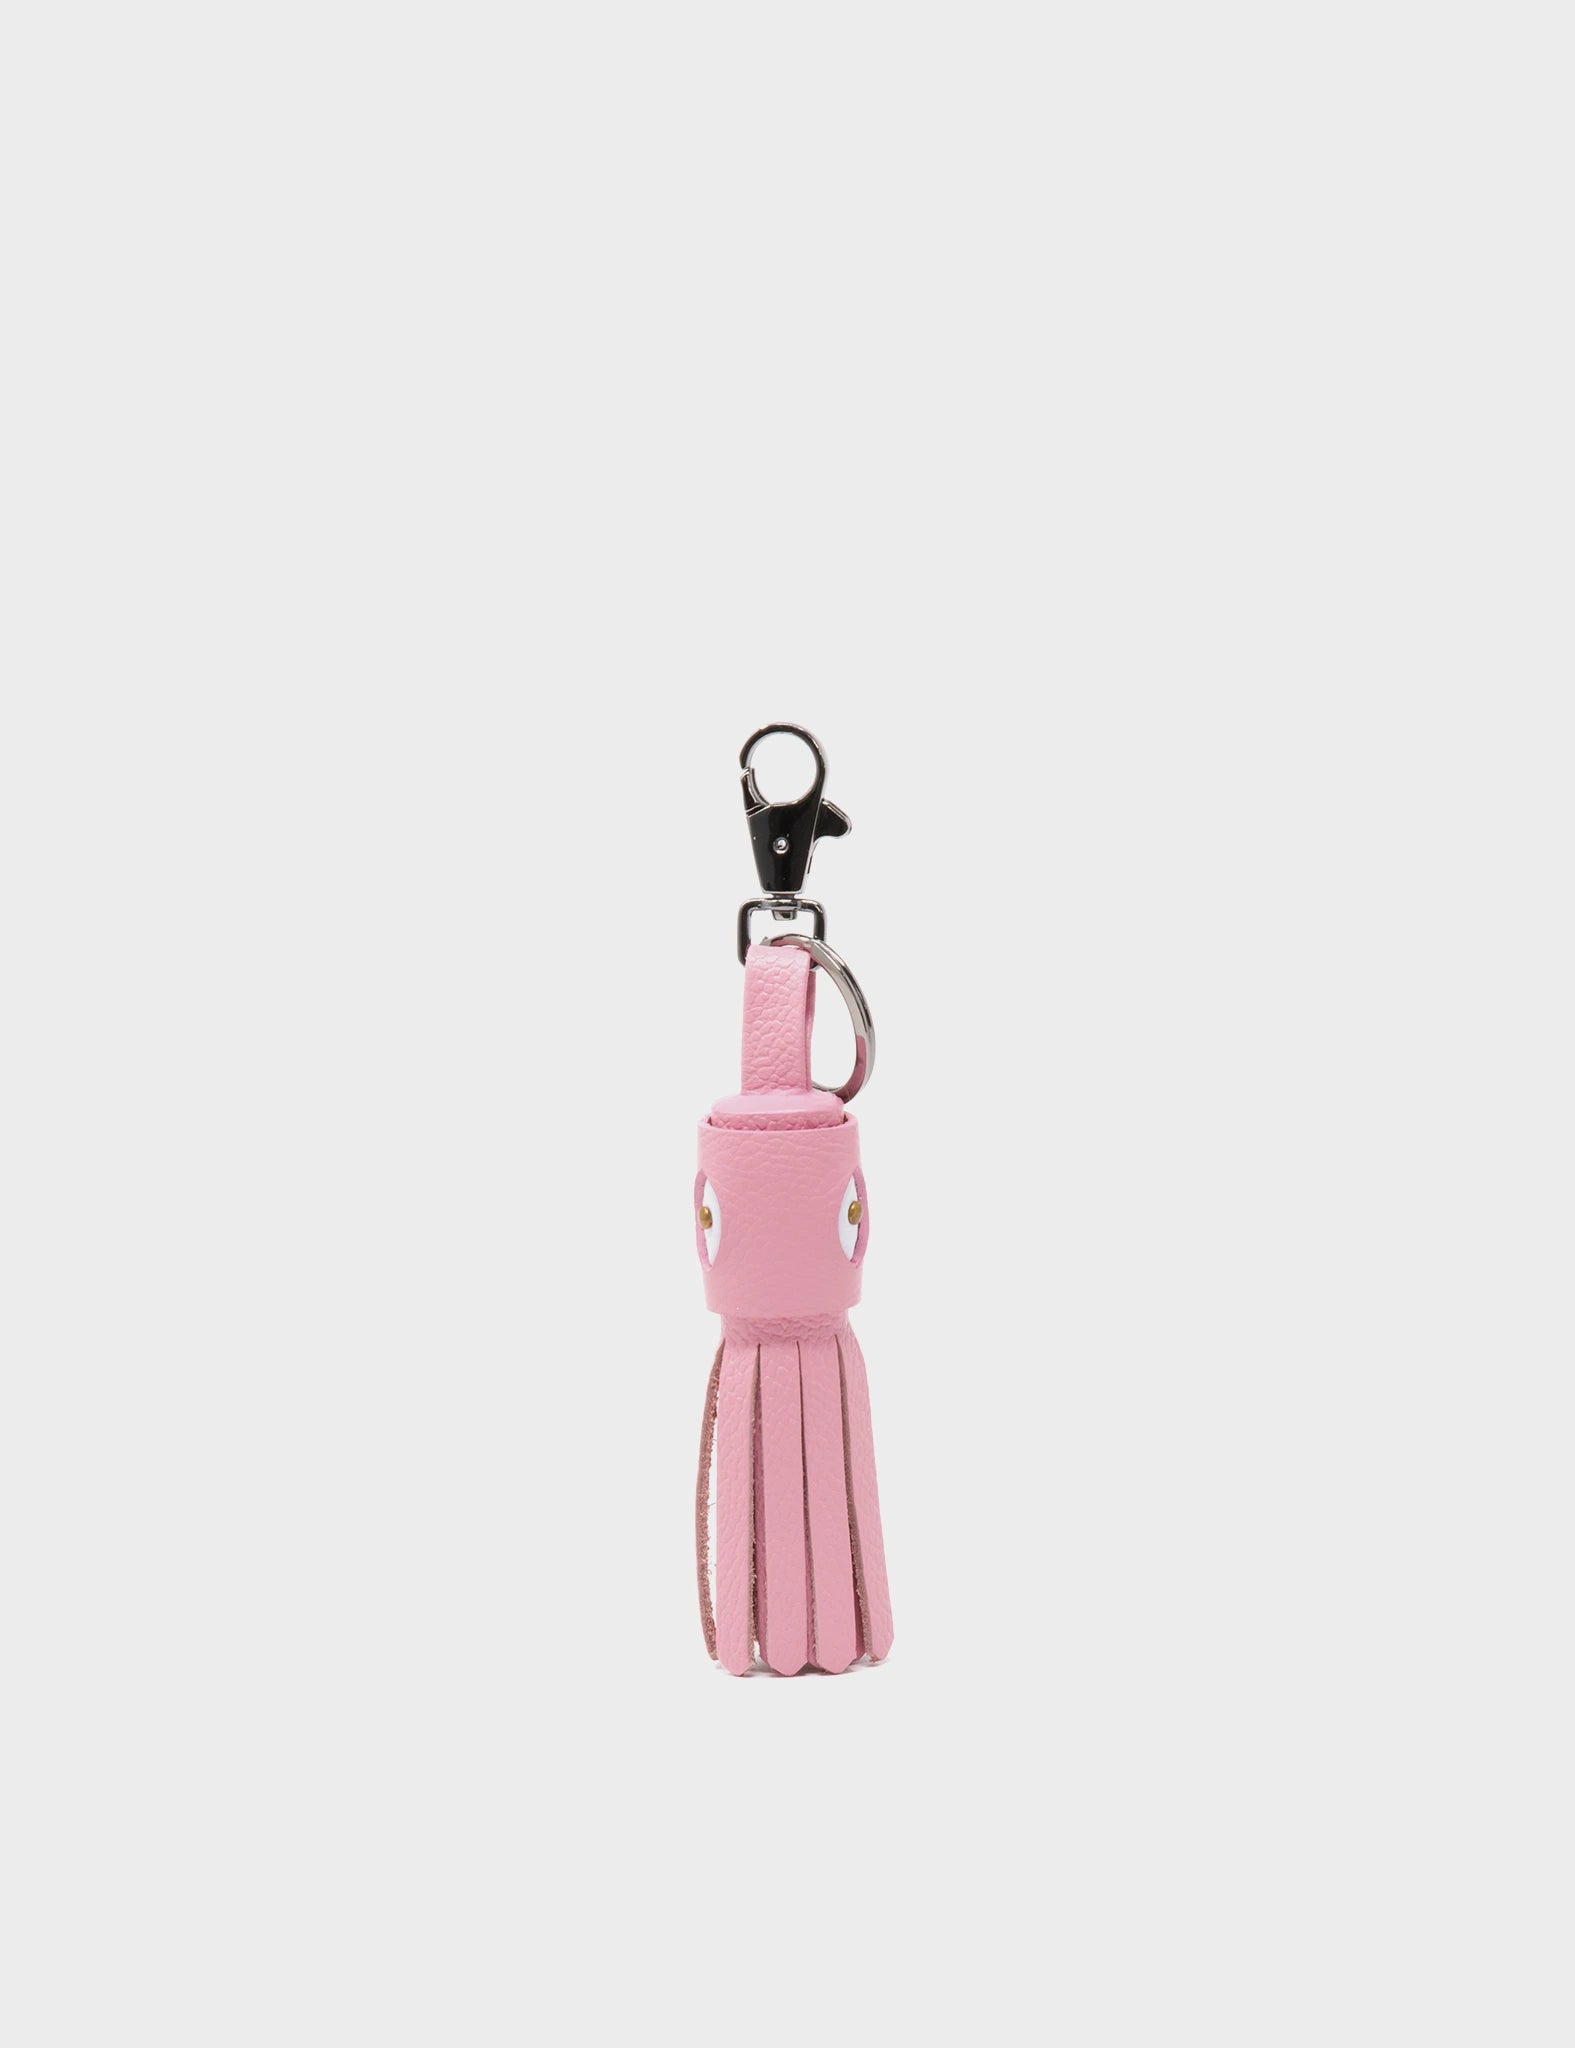 Calamari Charm - Blush Pink Leather Keychain